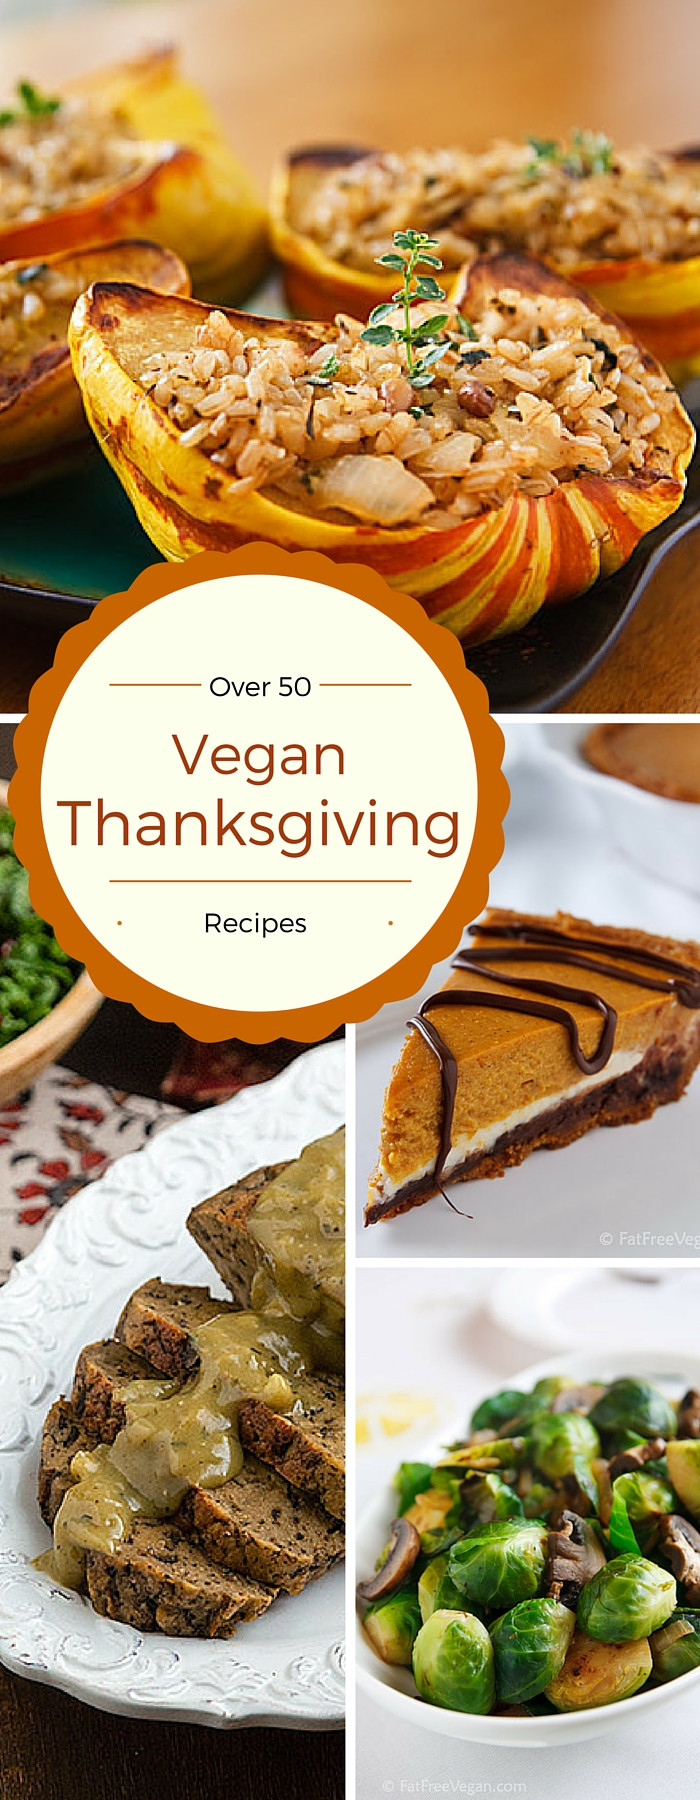 Easy Vegetarian Thanksgiving Recipes
 Thanksgiving Recipes Archives